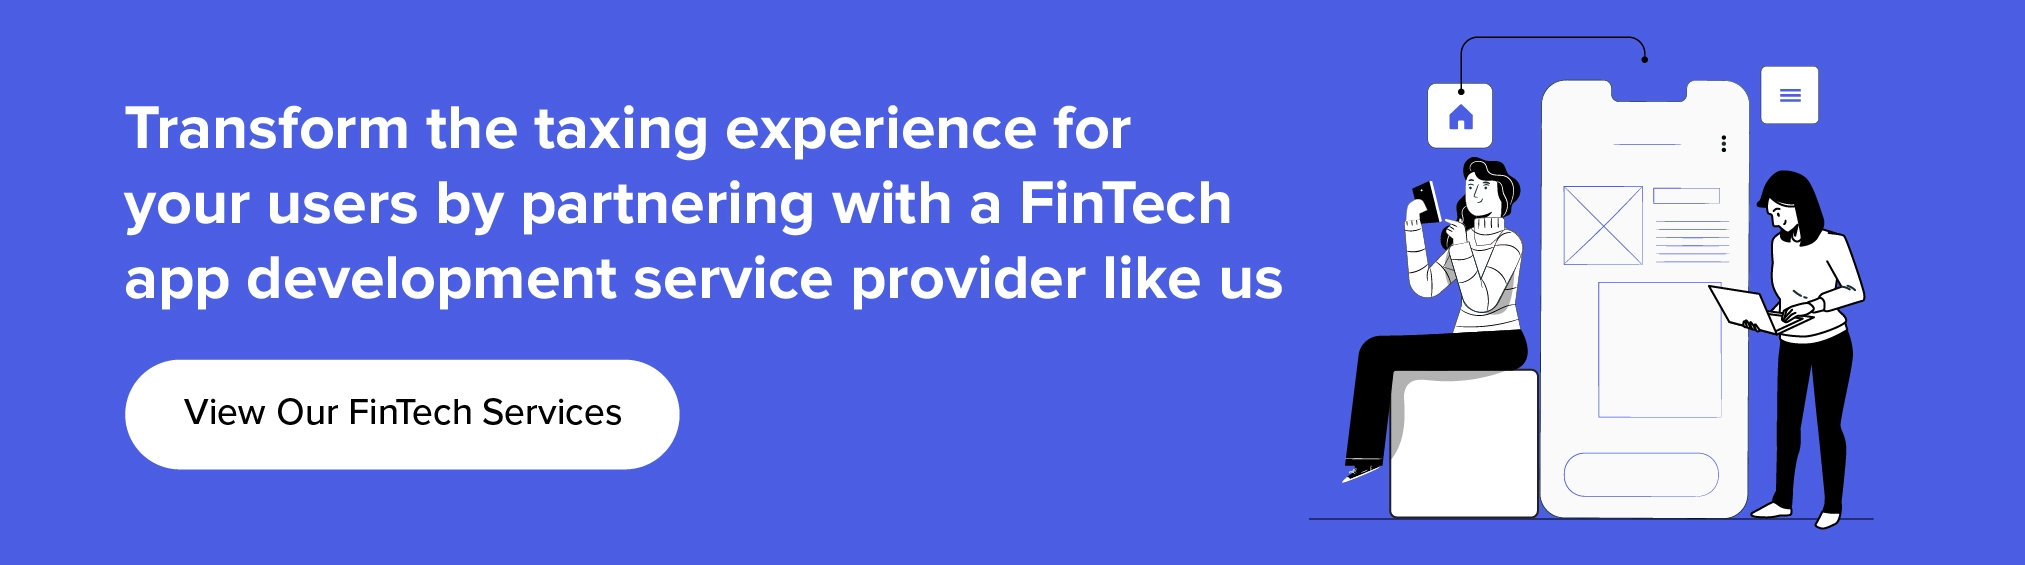 Partner with a FinTech app development service provider like us